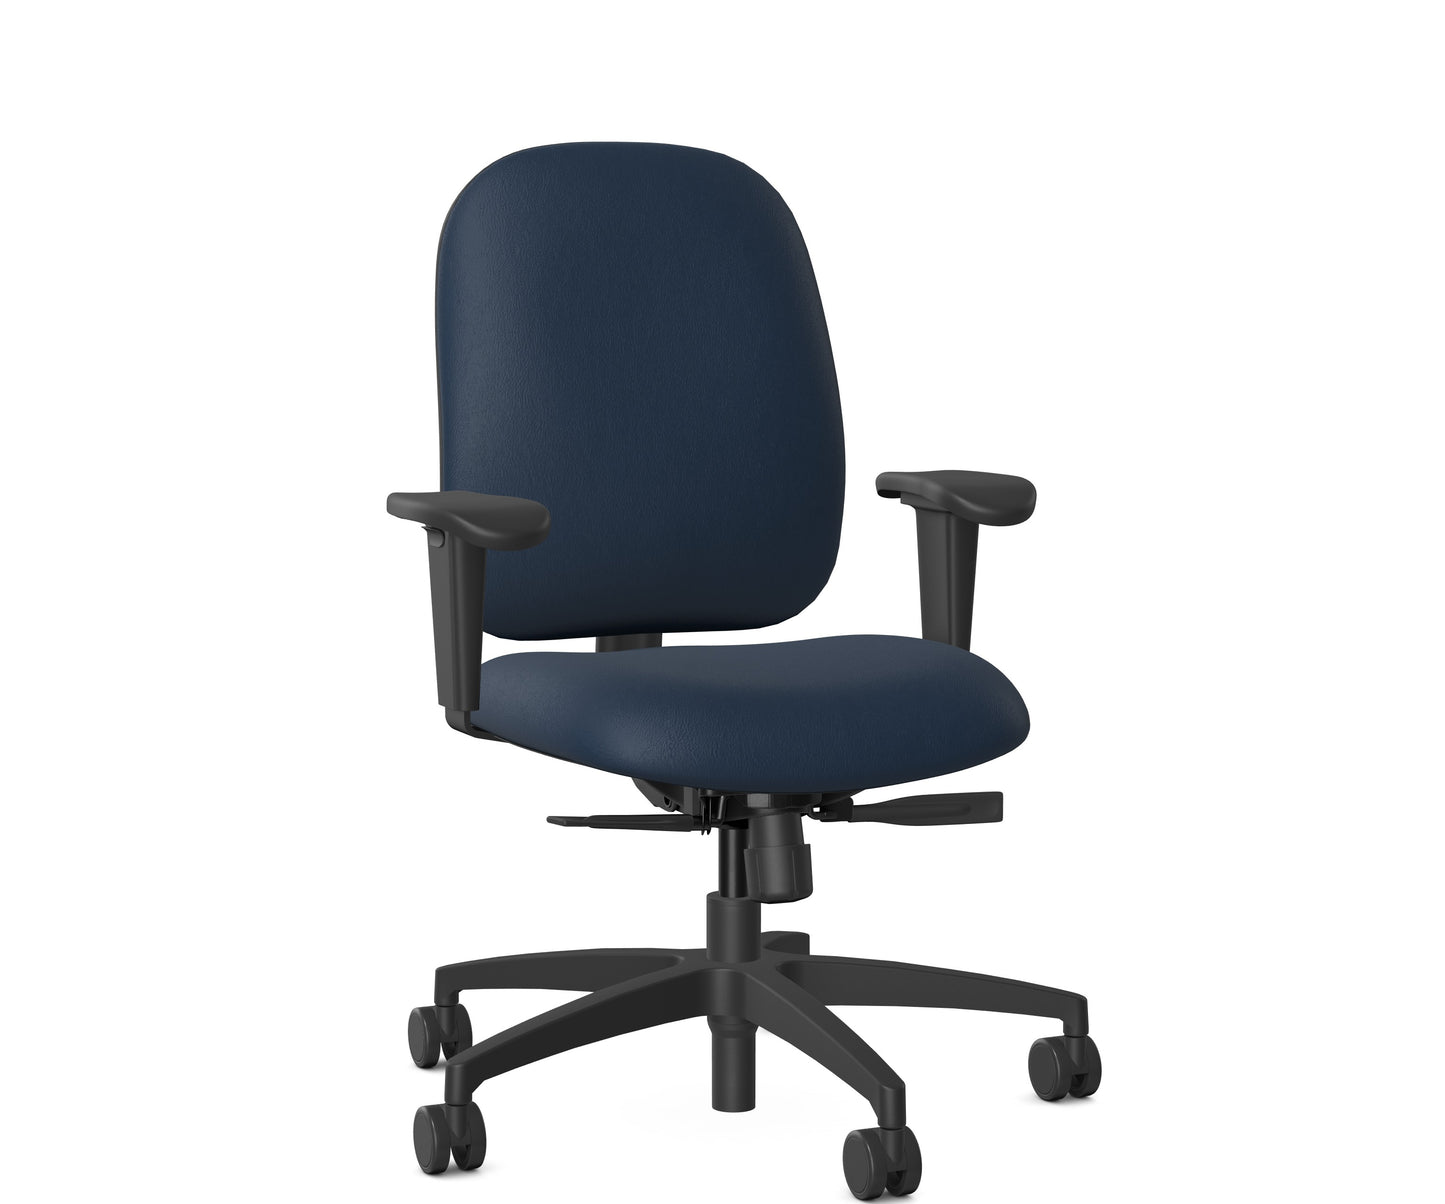 Presto Mid-Back Office Chair